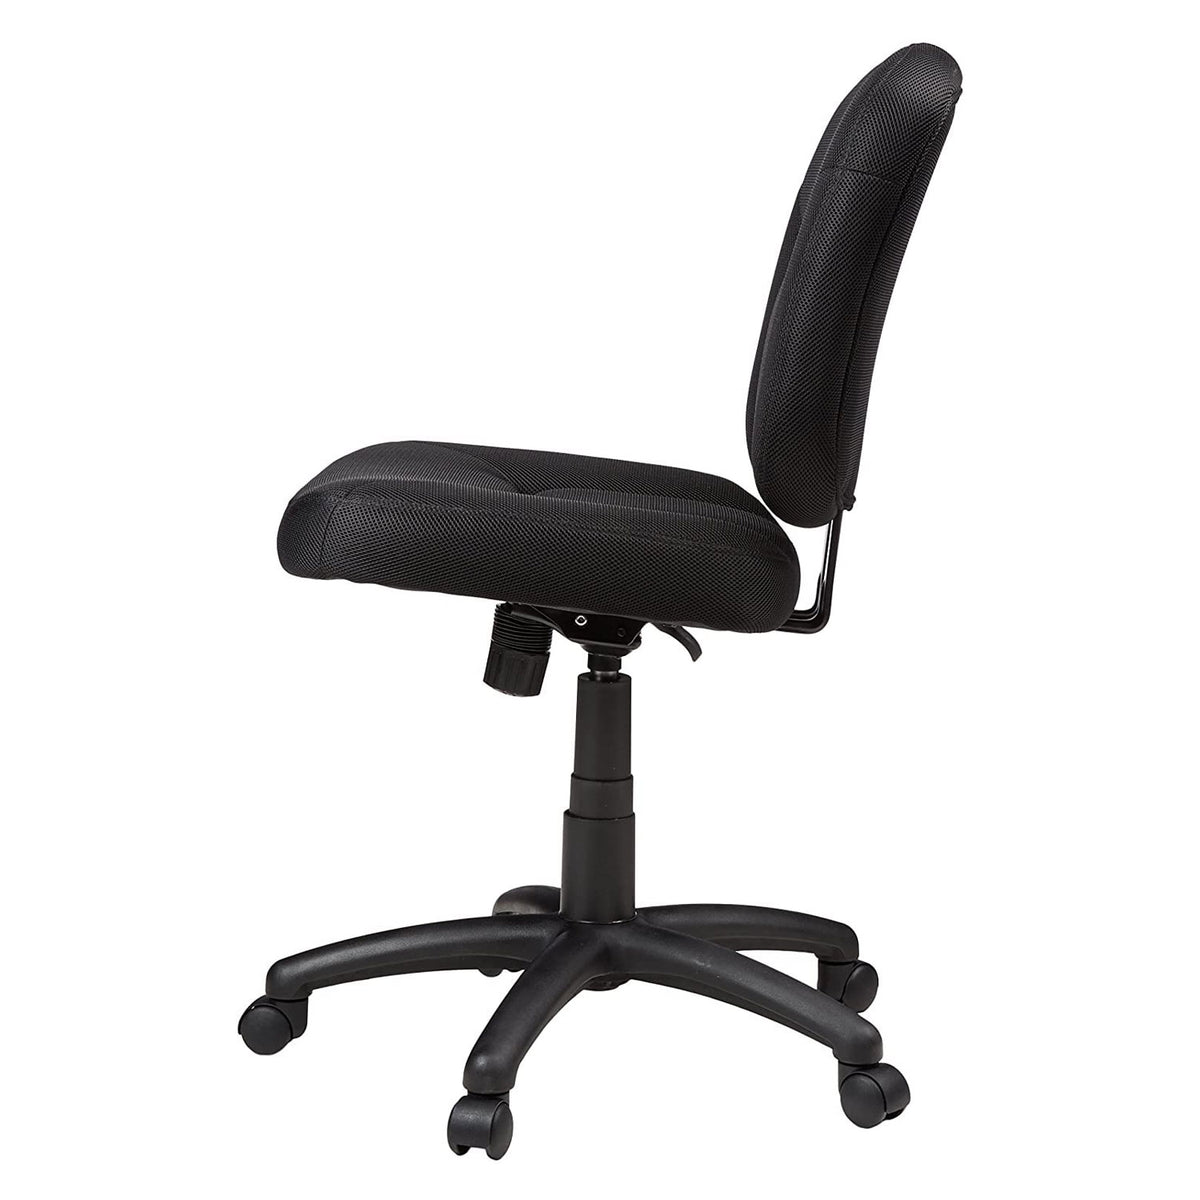 SmileSellers Upholstered, Low-Back, Adjustable, Swivel Office Desk Chair, Black